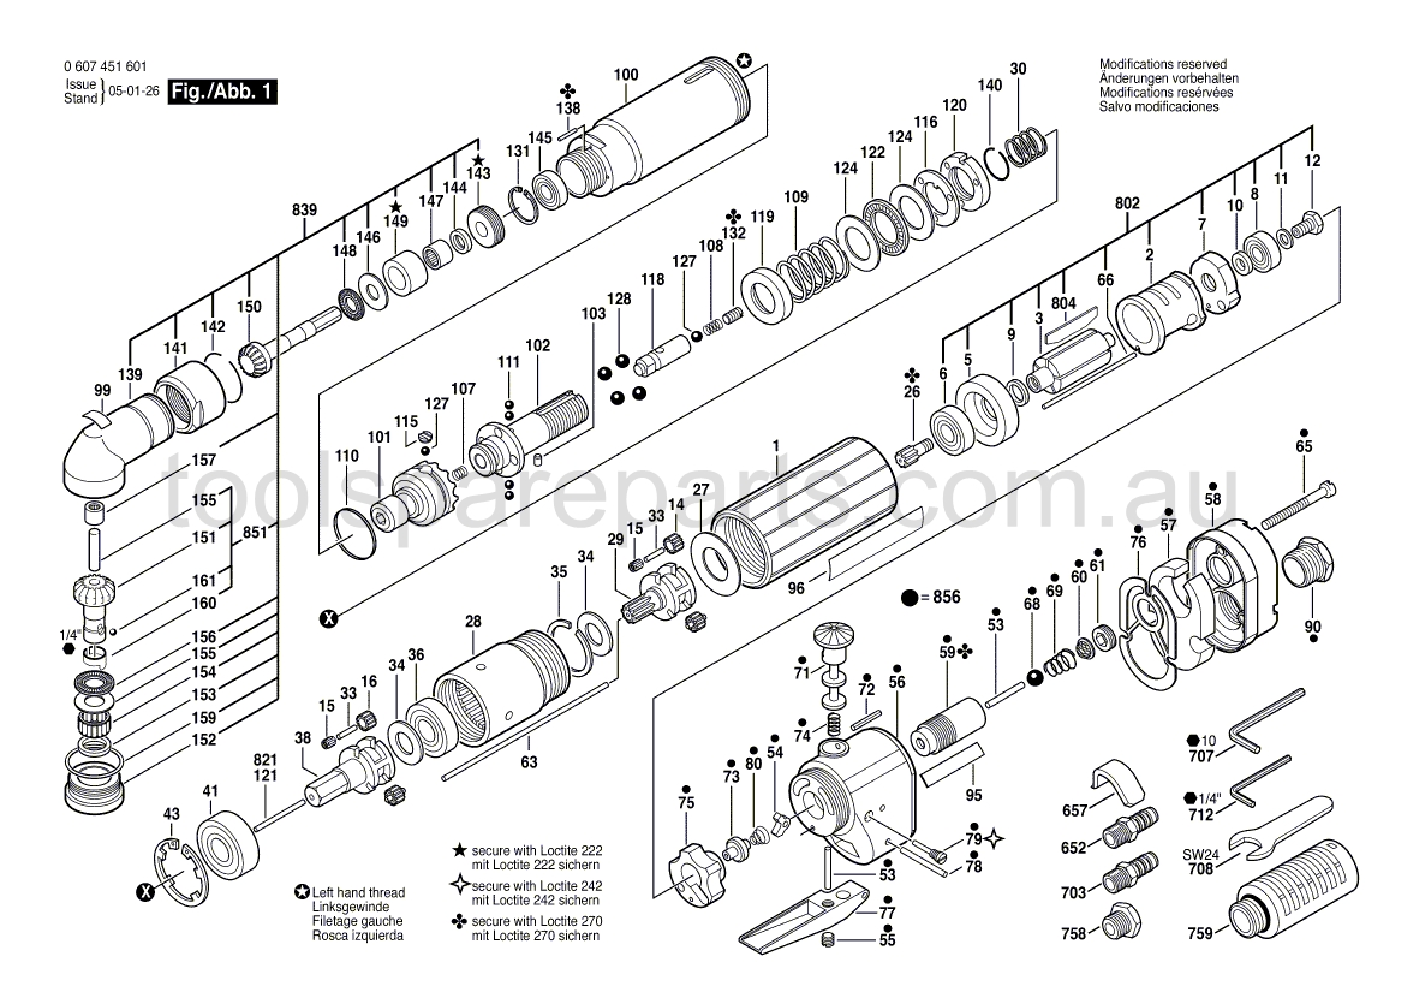 Bosch 370 WATT-SERIE 0607451601  Diagram 1